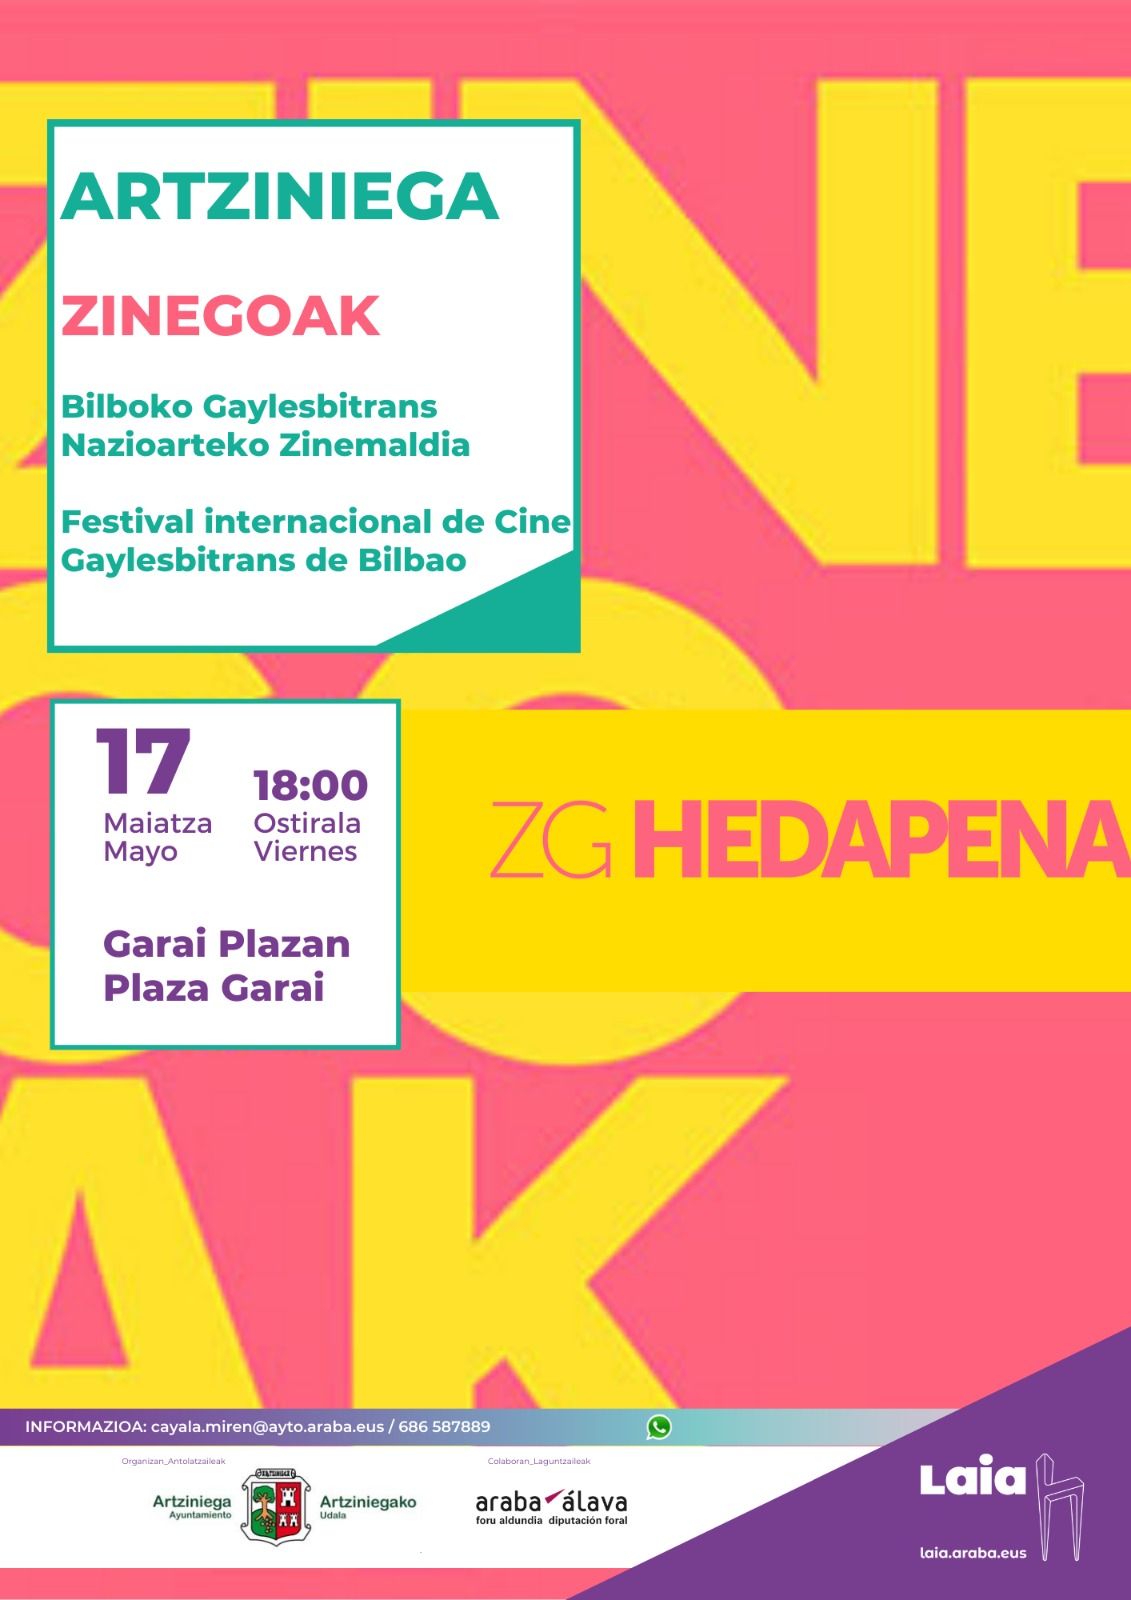 Zinegoak: Festival internacional de Cine Gaylesbitrans de Bilbao